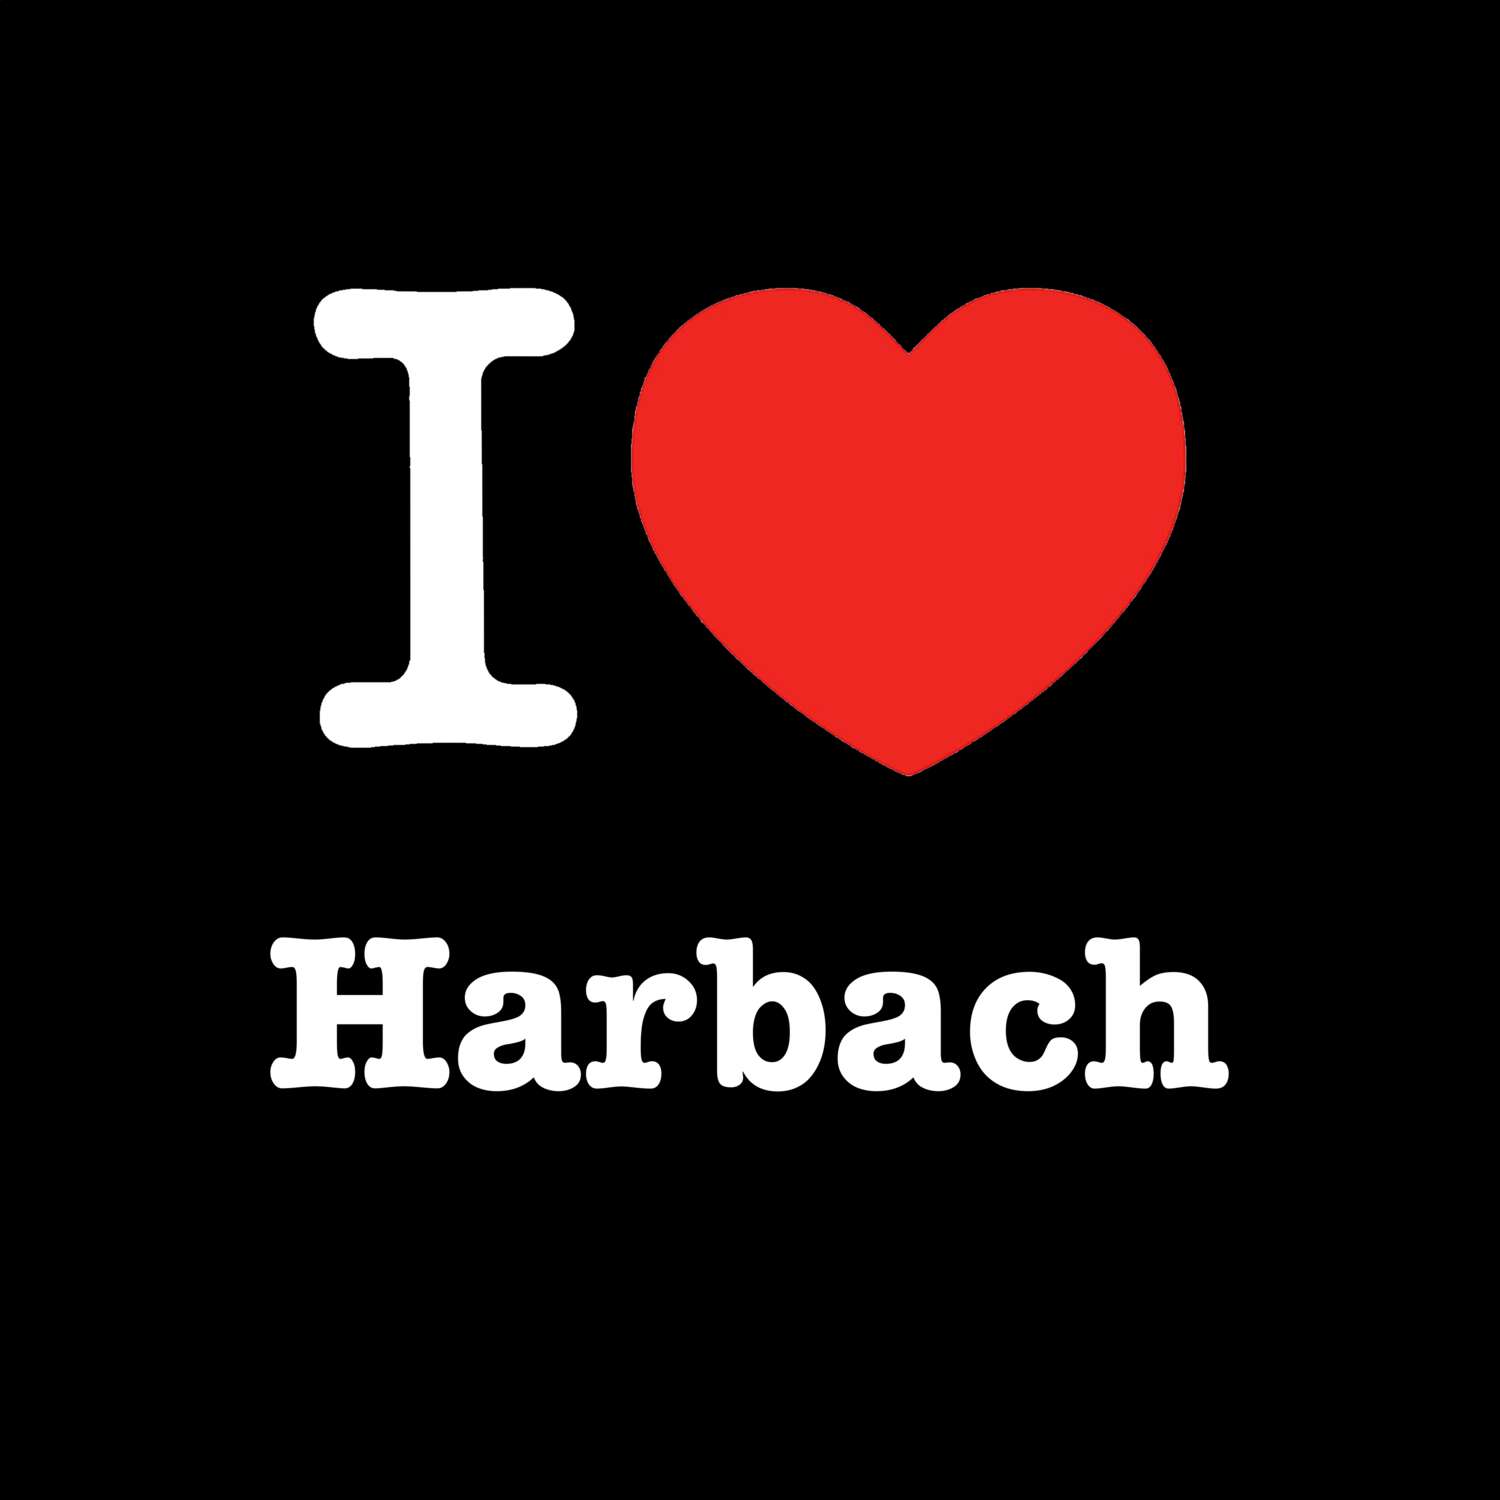 Harbach T-Shirt »I love«